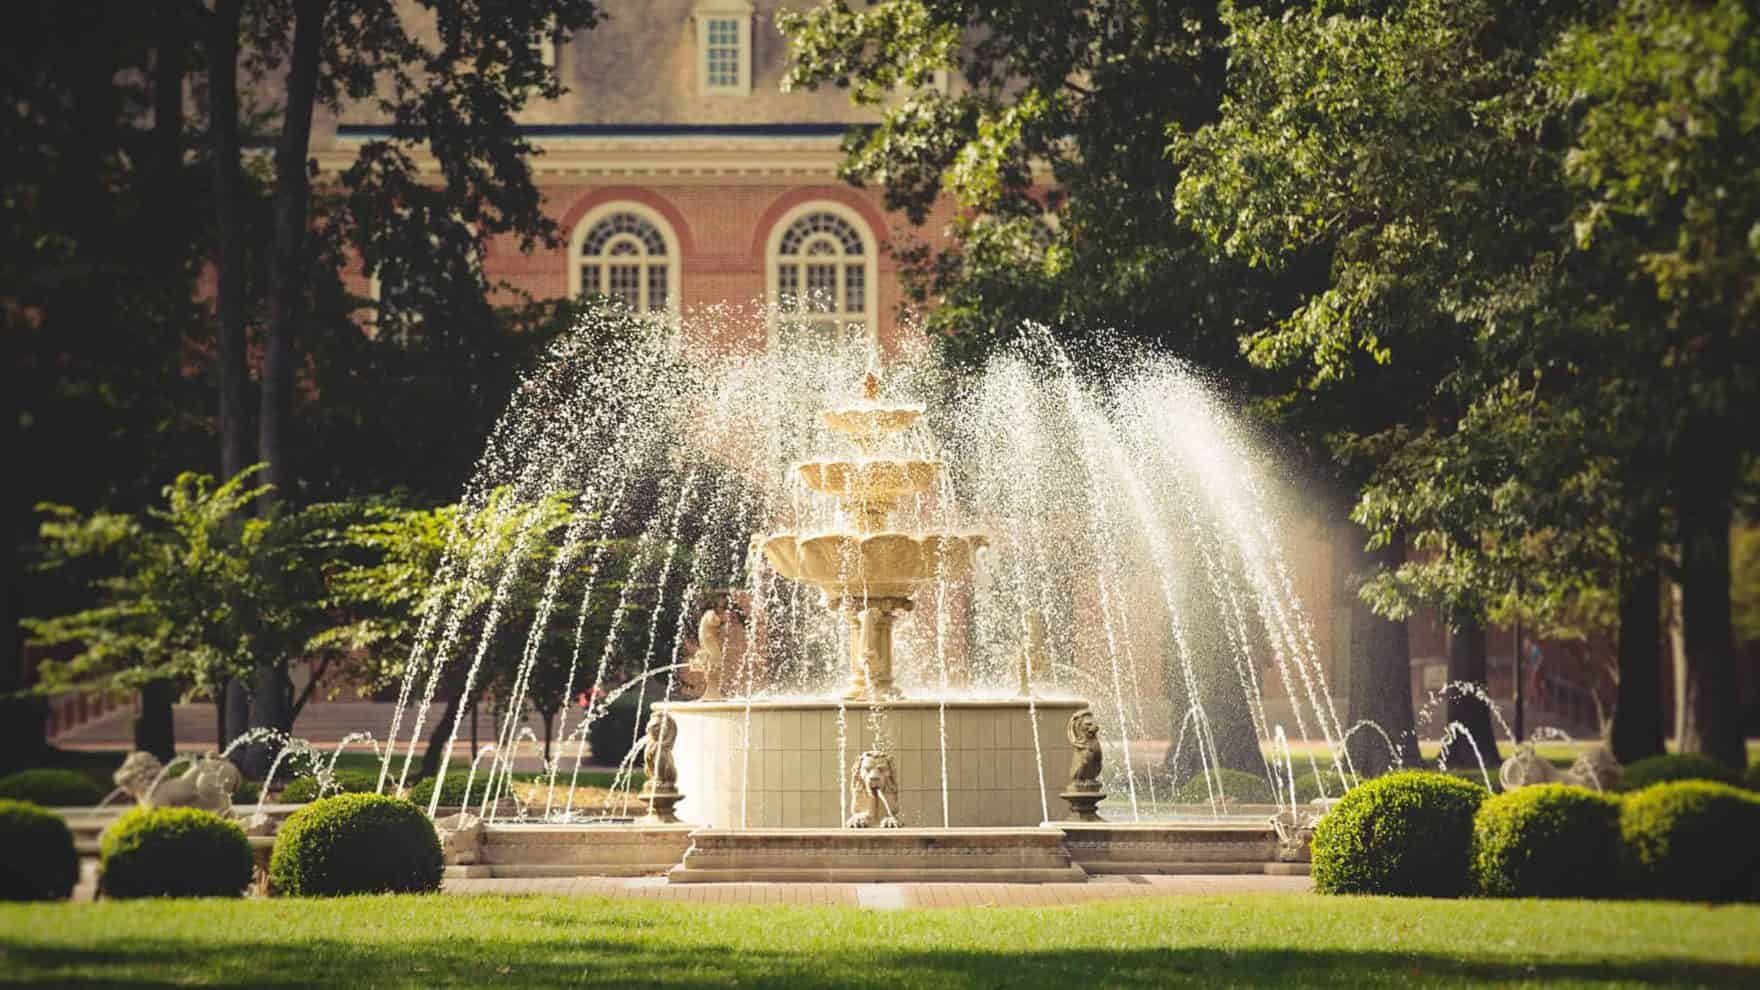 The fountain at Regent University's beautiful campus in Virginia Beach, VA 23464.